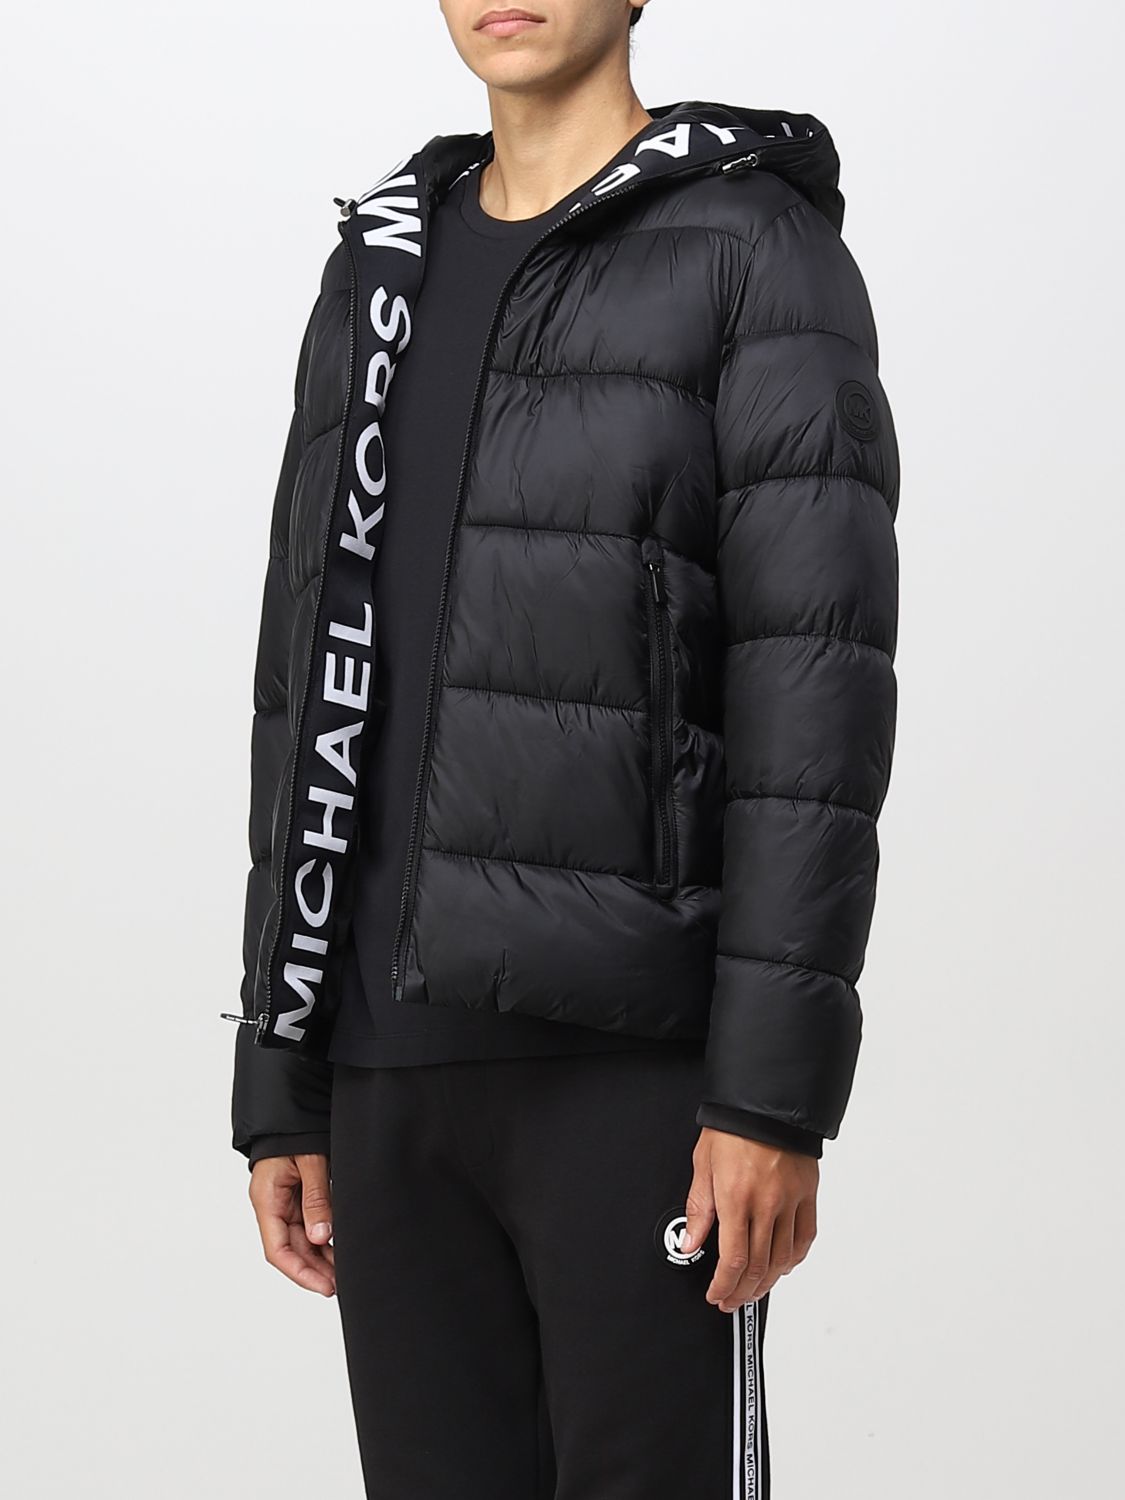 Buy Michael Kors MixedMedia Hooded Jacket  Black Color Men  AJIO LUXE